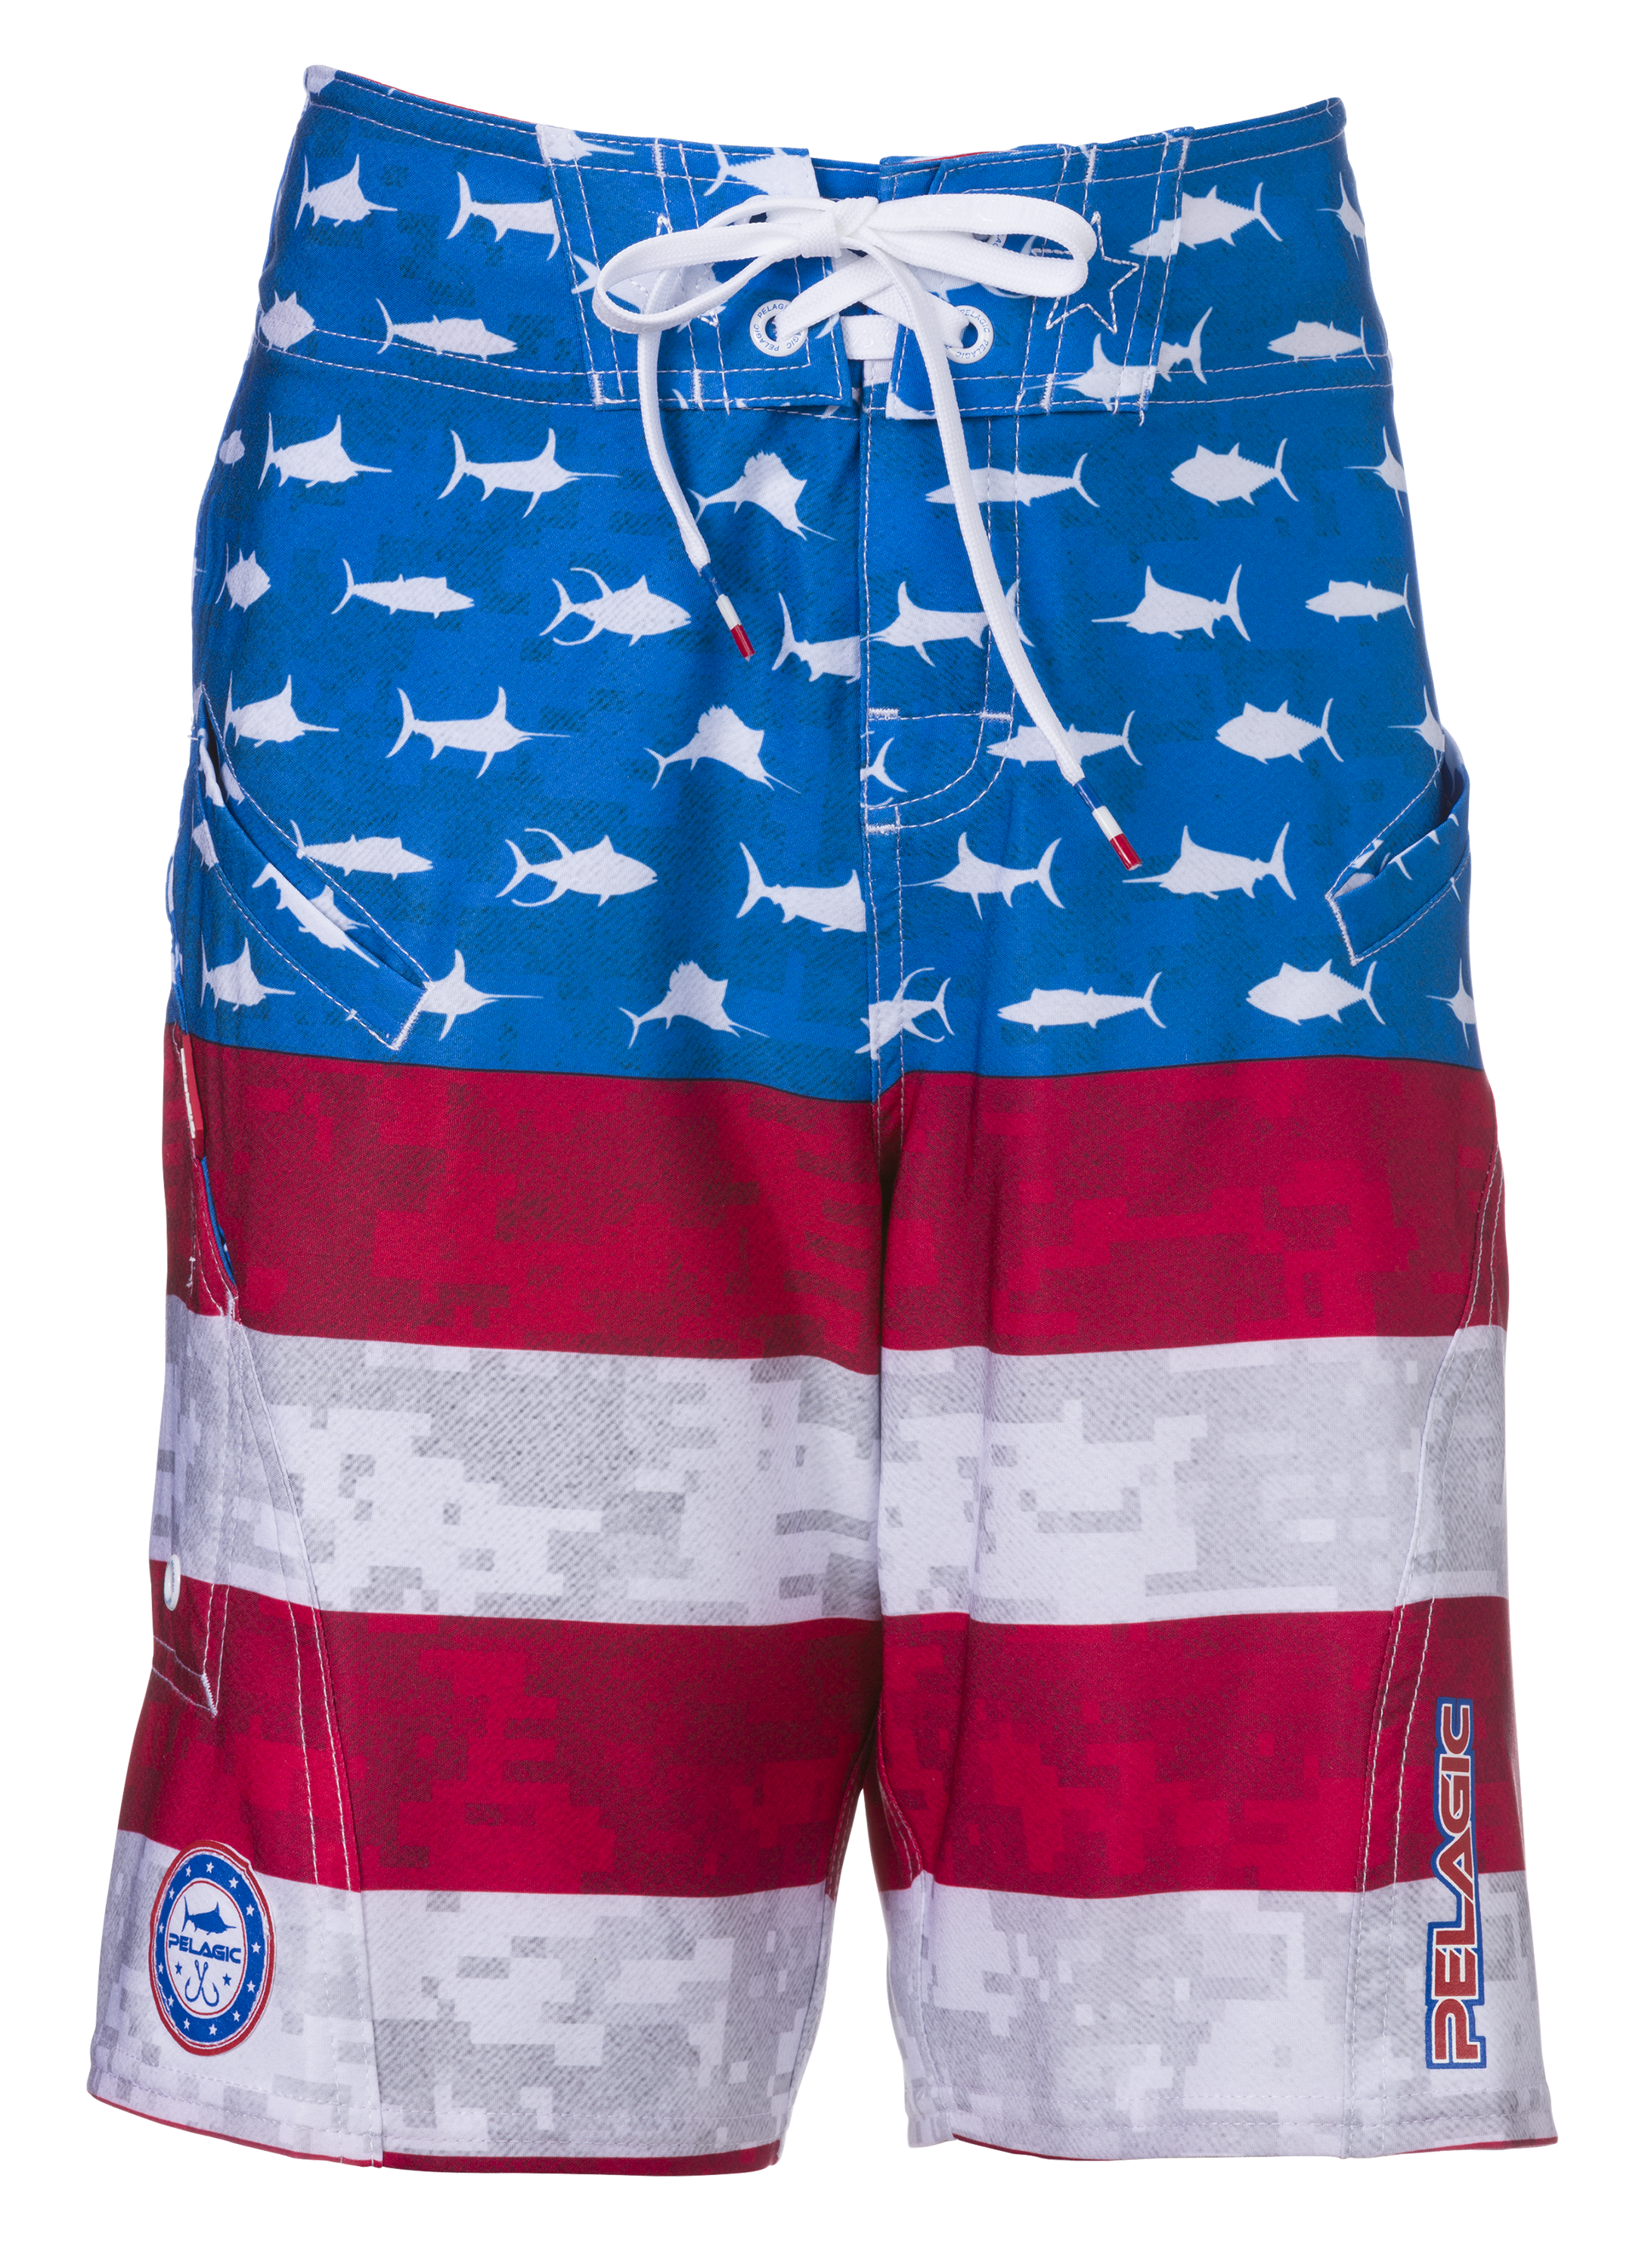 Pelagic Sharkskin Boardshort Shorts for Kids | Bass Pro Shops